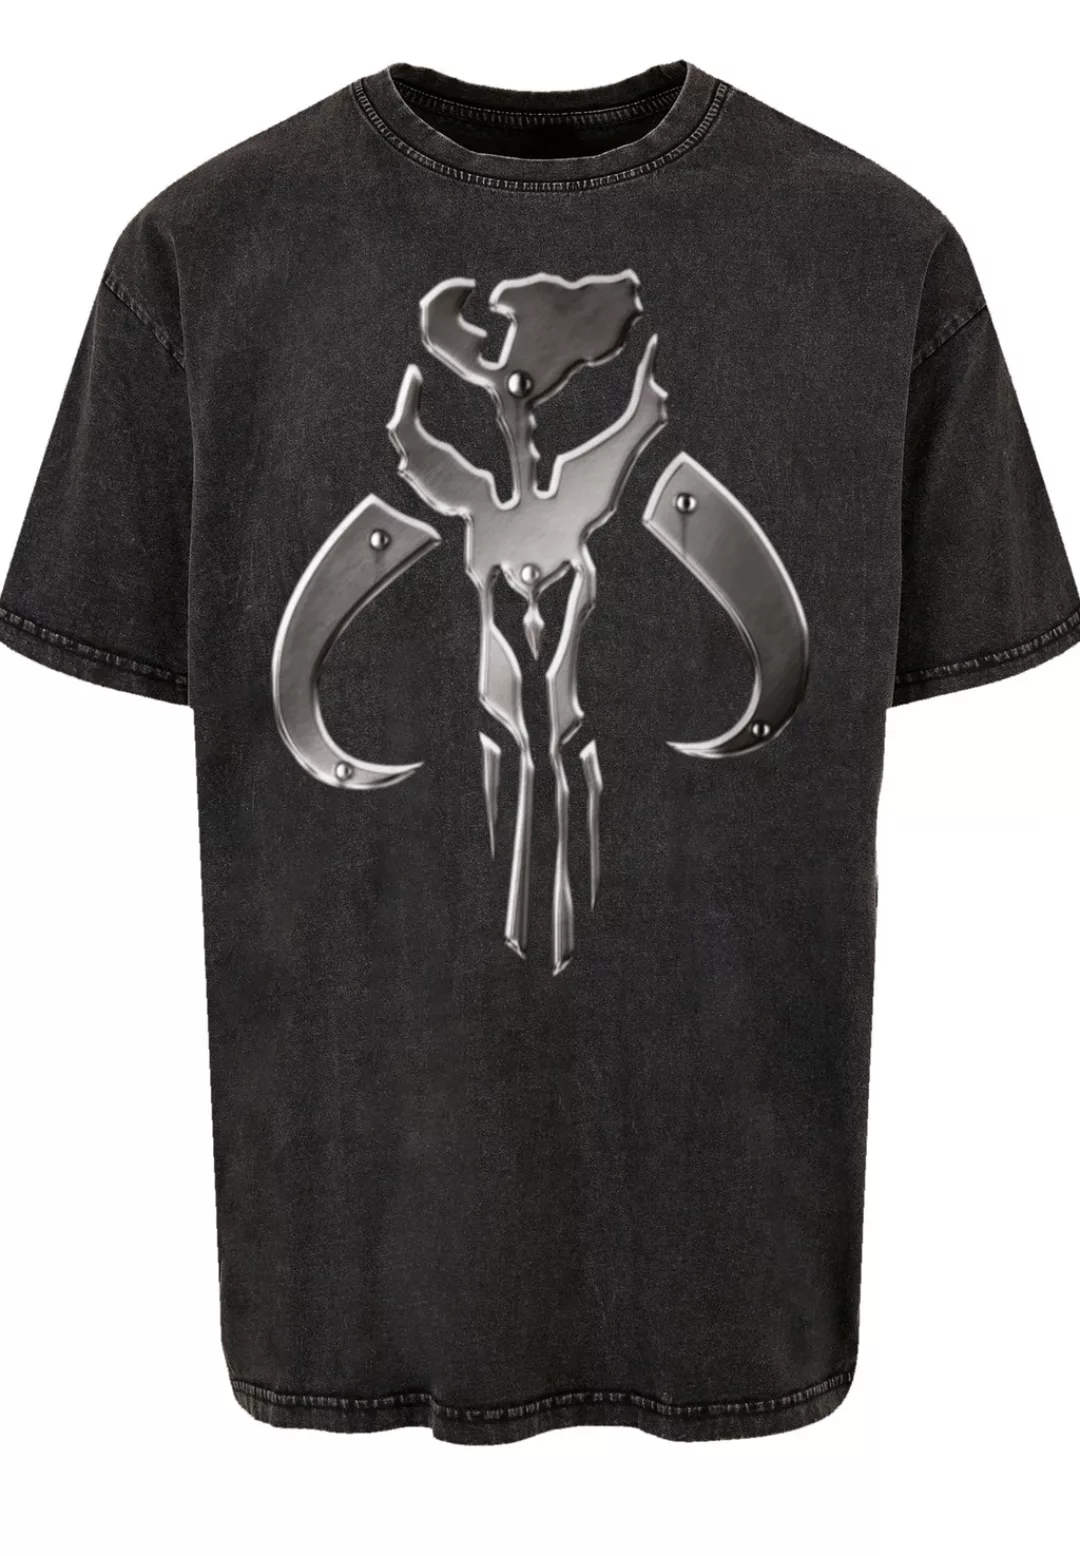 F4NT4STIC T-Shirt "Star Wars The Mandalorian Boba Fett" günstig online kaufen